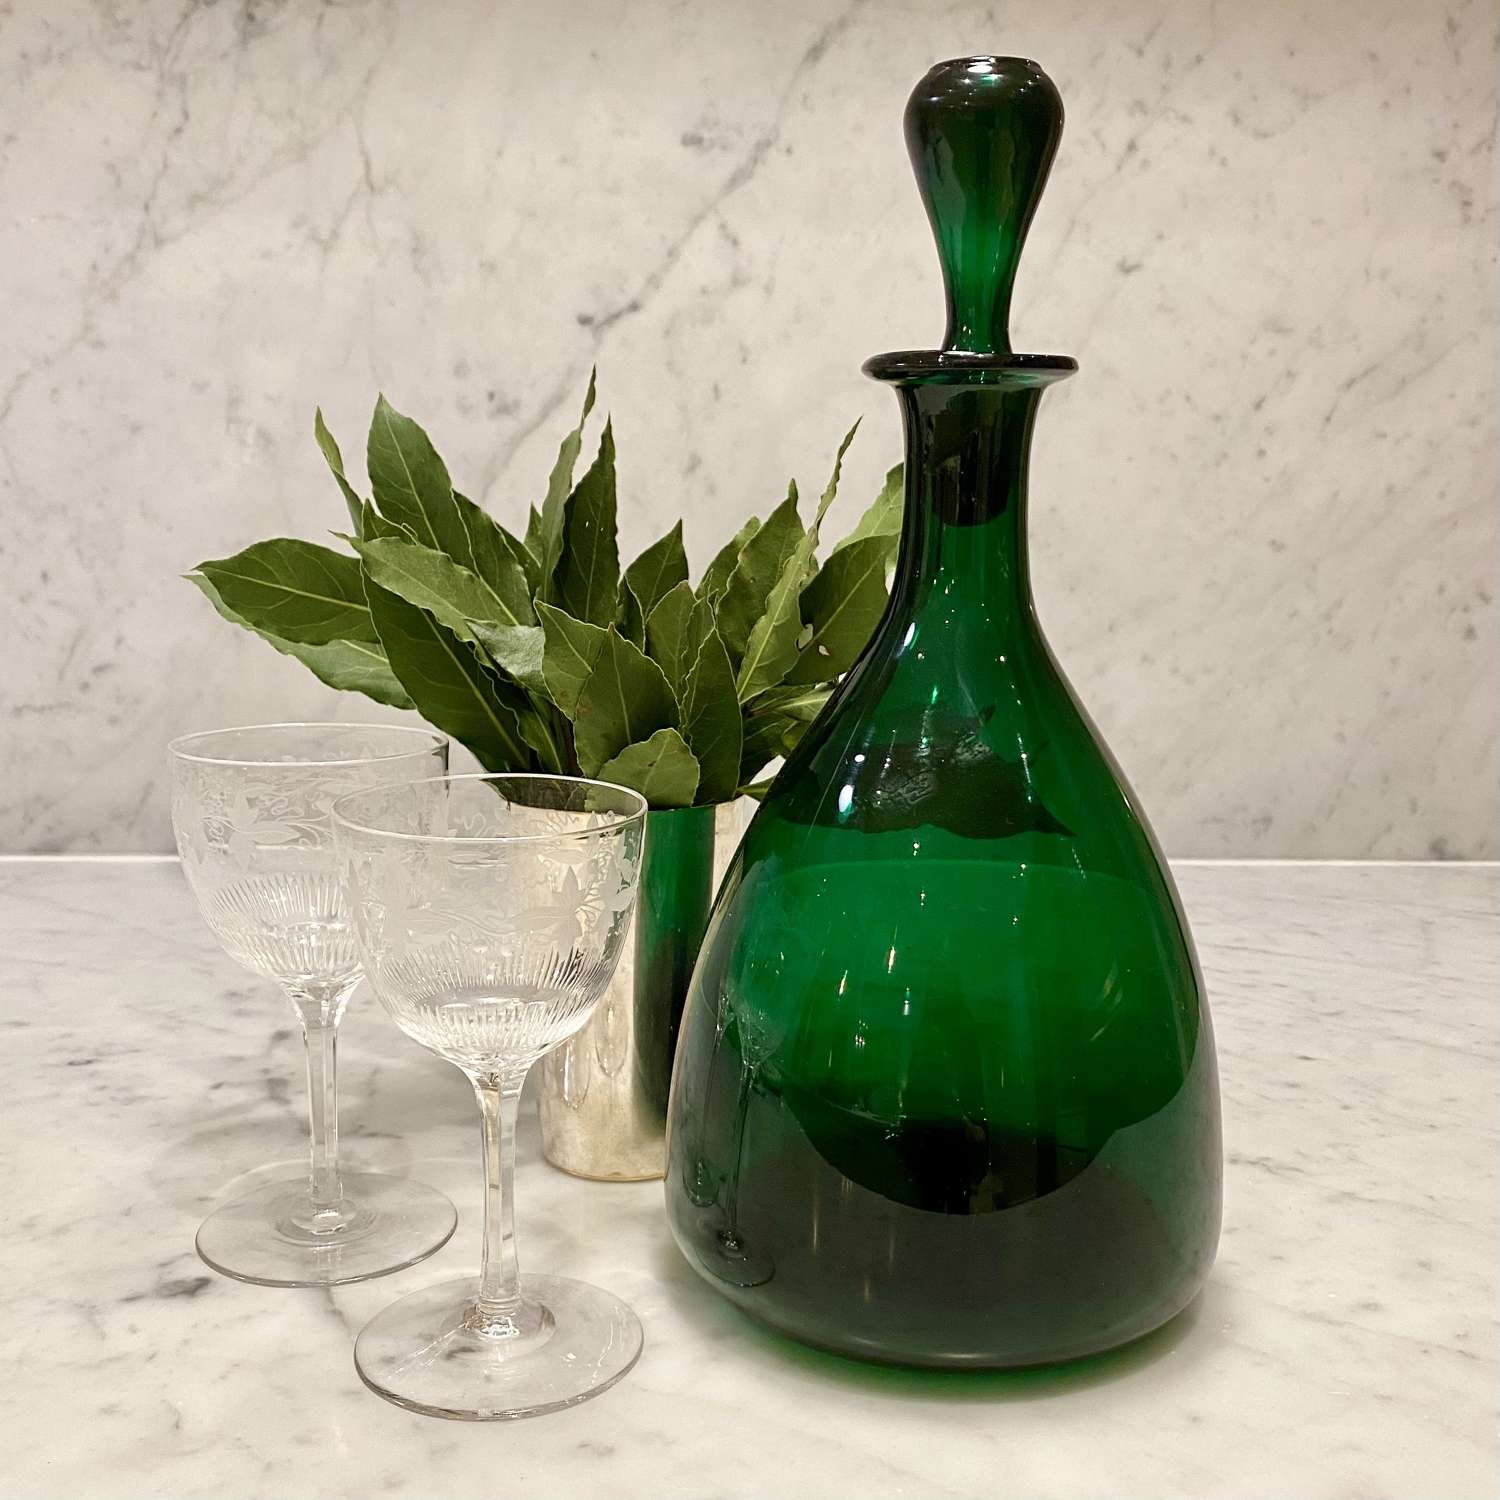 Georgian Bristol green glass broad taper based decanter